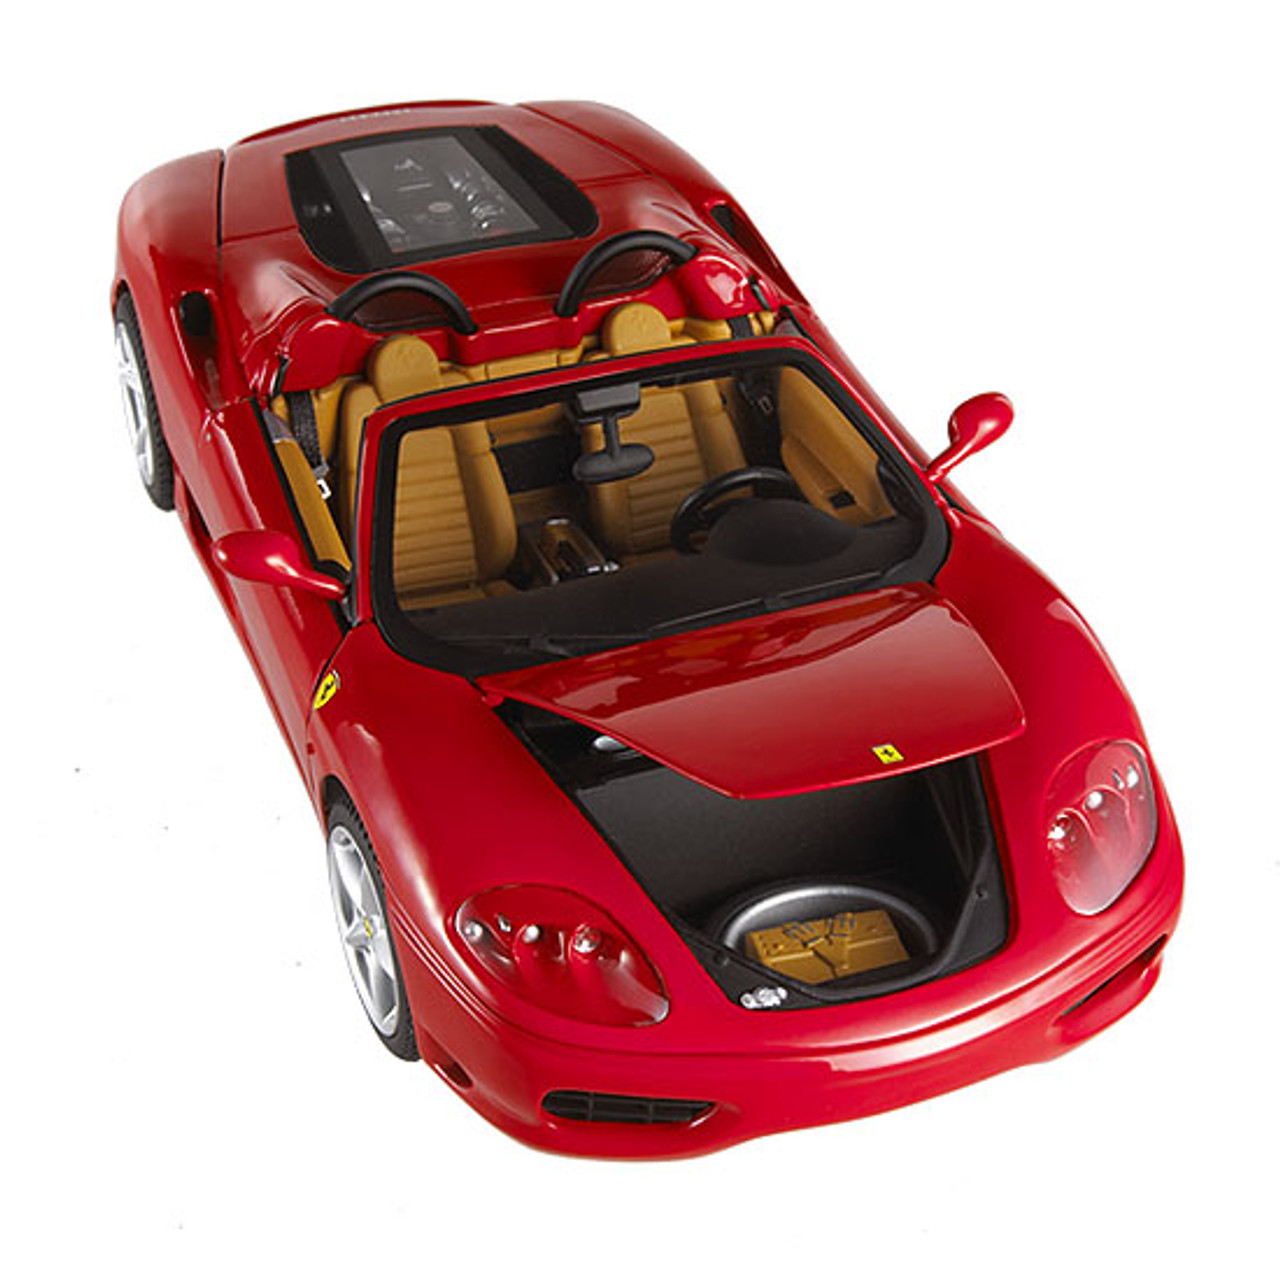 1/18 Hot Wheels Ferrari 360 Spider (Red) Diecast Car Model